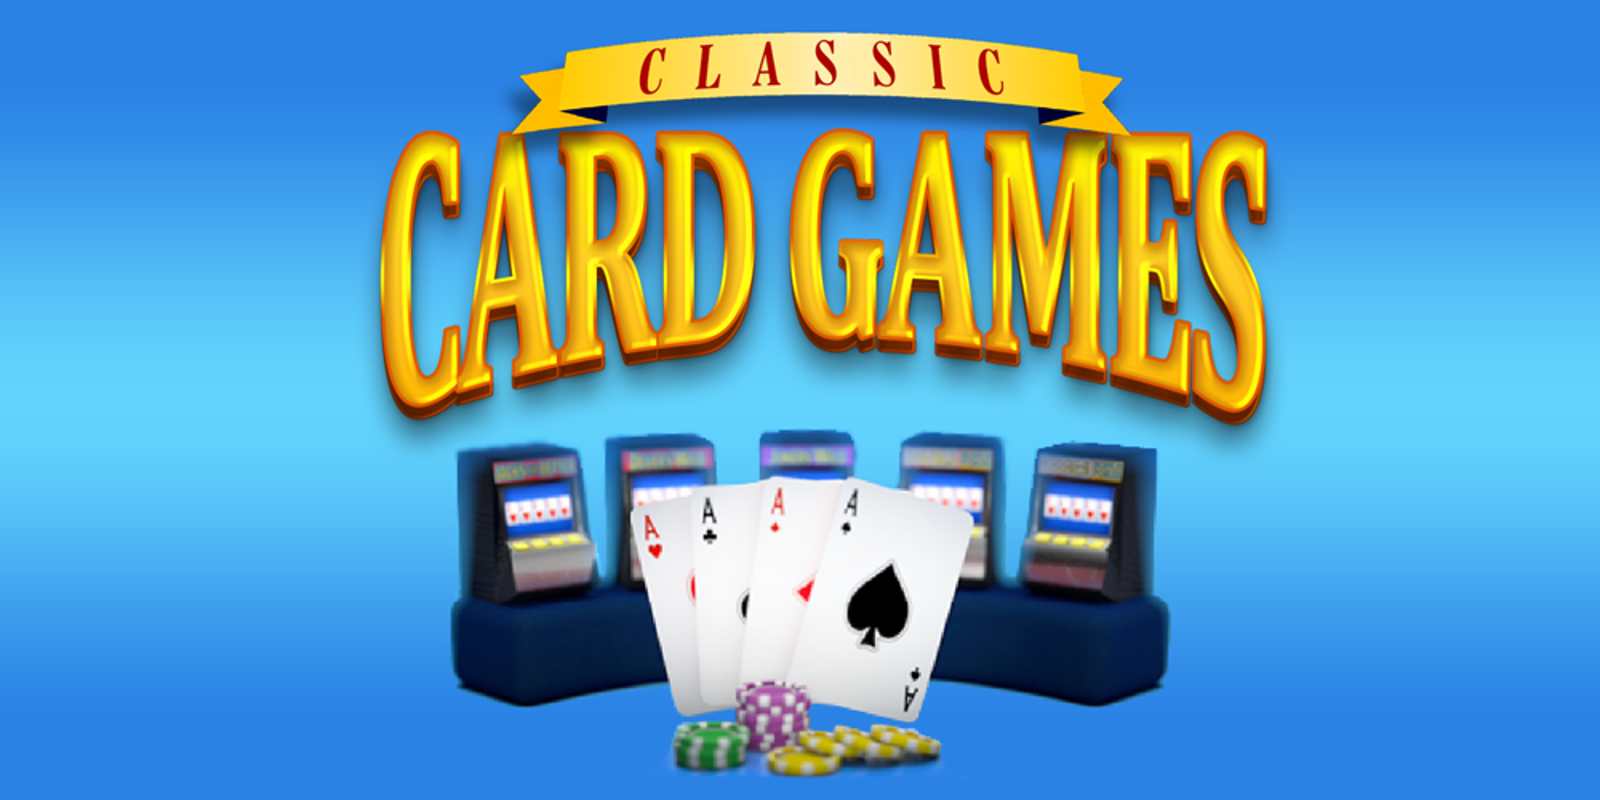 Classic Card Games | Nintendo 3DS download software | Games | Nintendo